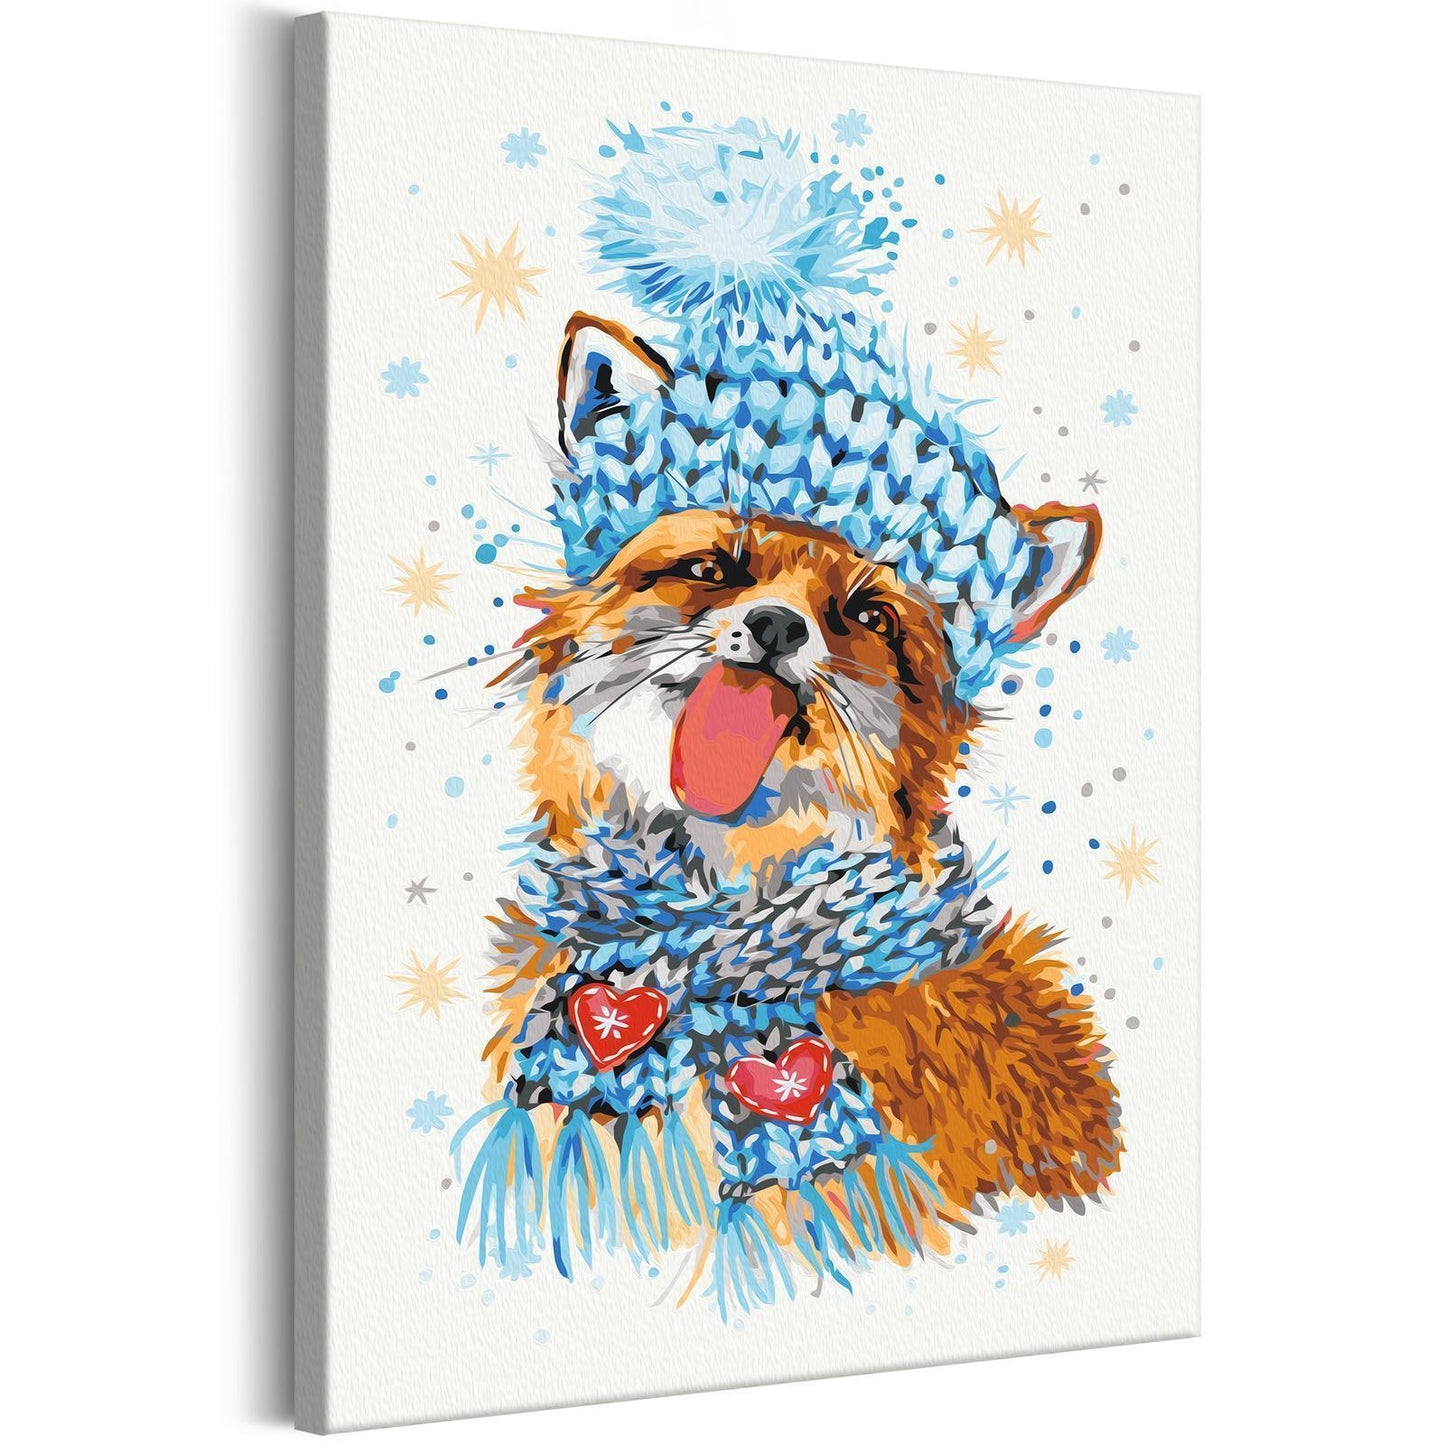 DIY Canvas Painting - Impish Fox 